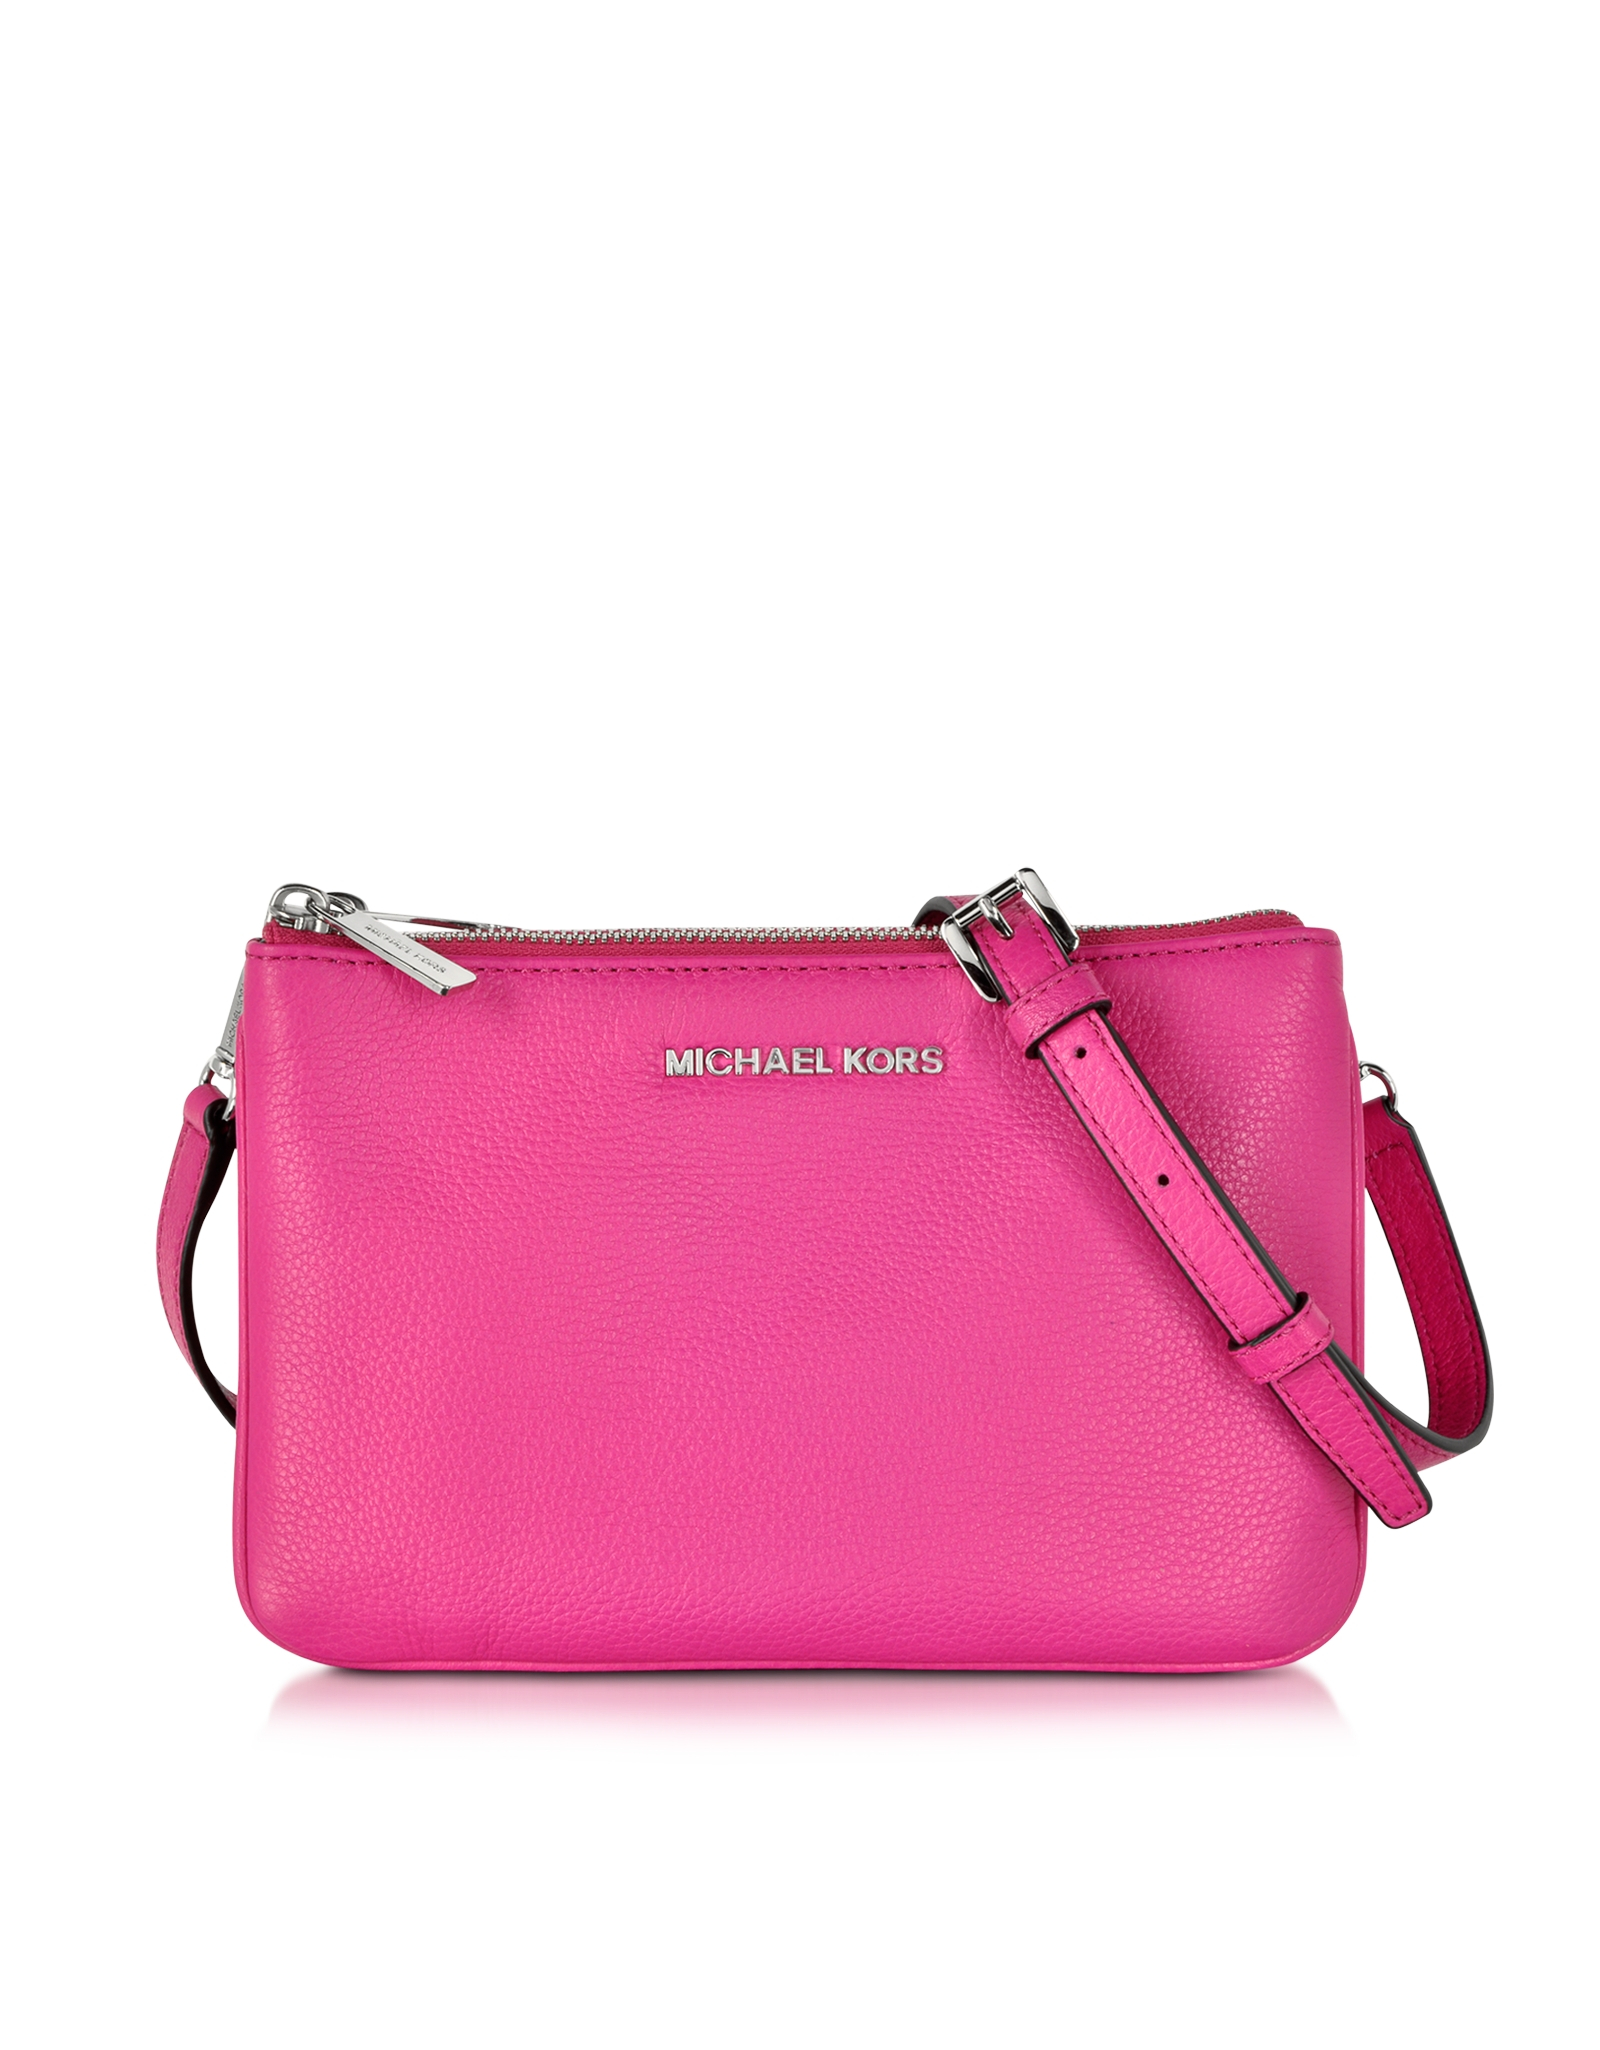 Lyst - Michael Kors Bedford Raspberry Leather Gusset Crossbody Bag in Pink